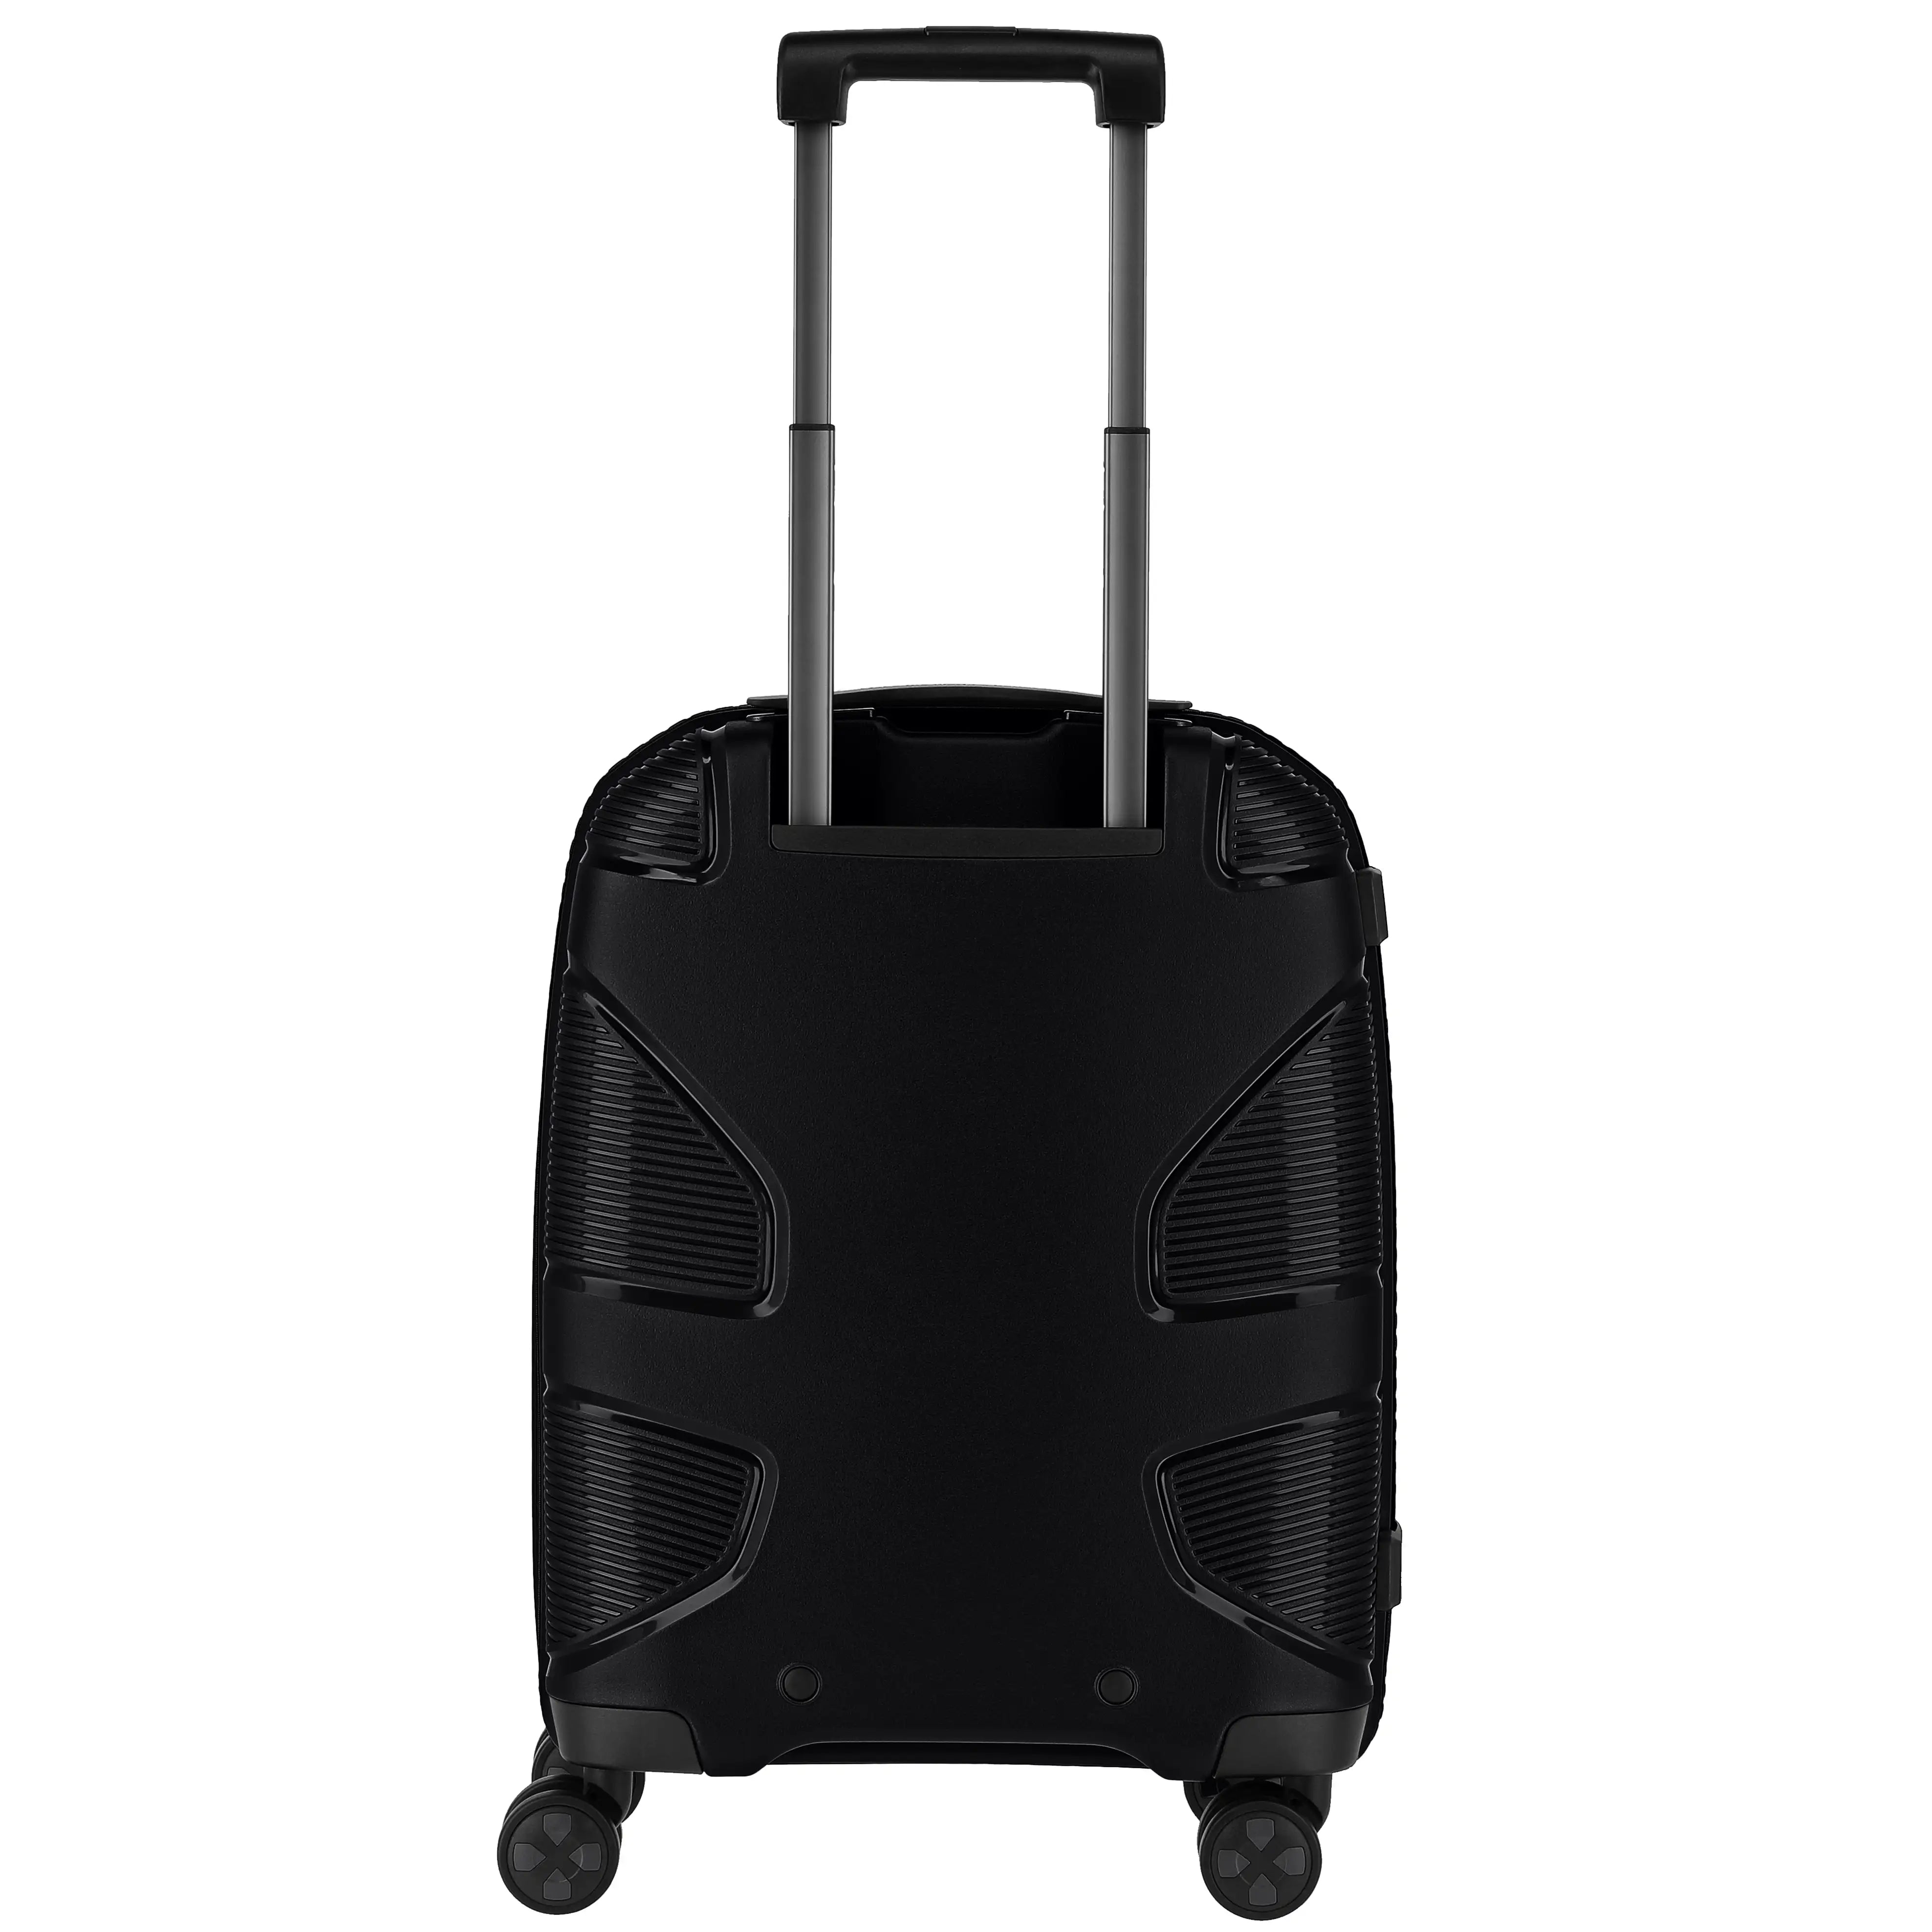 Impackt IP1 4-wheel cabin suitcase 55 cm - Spring Green